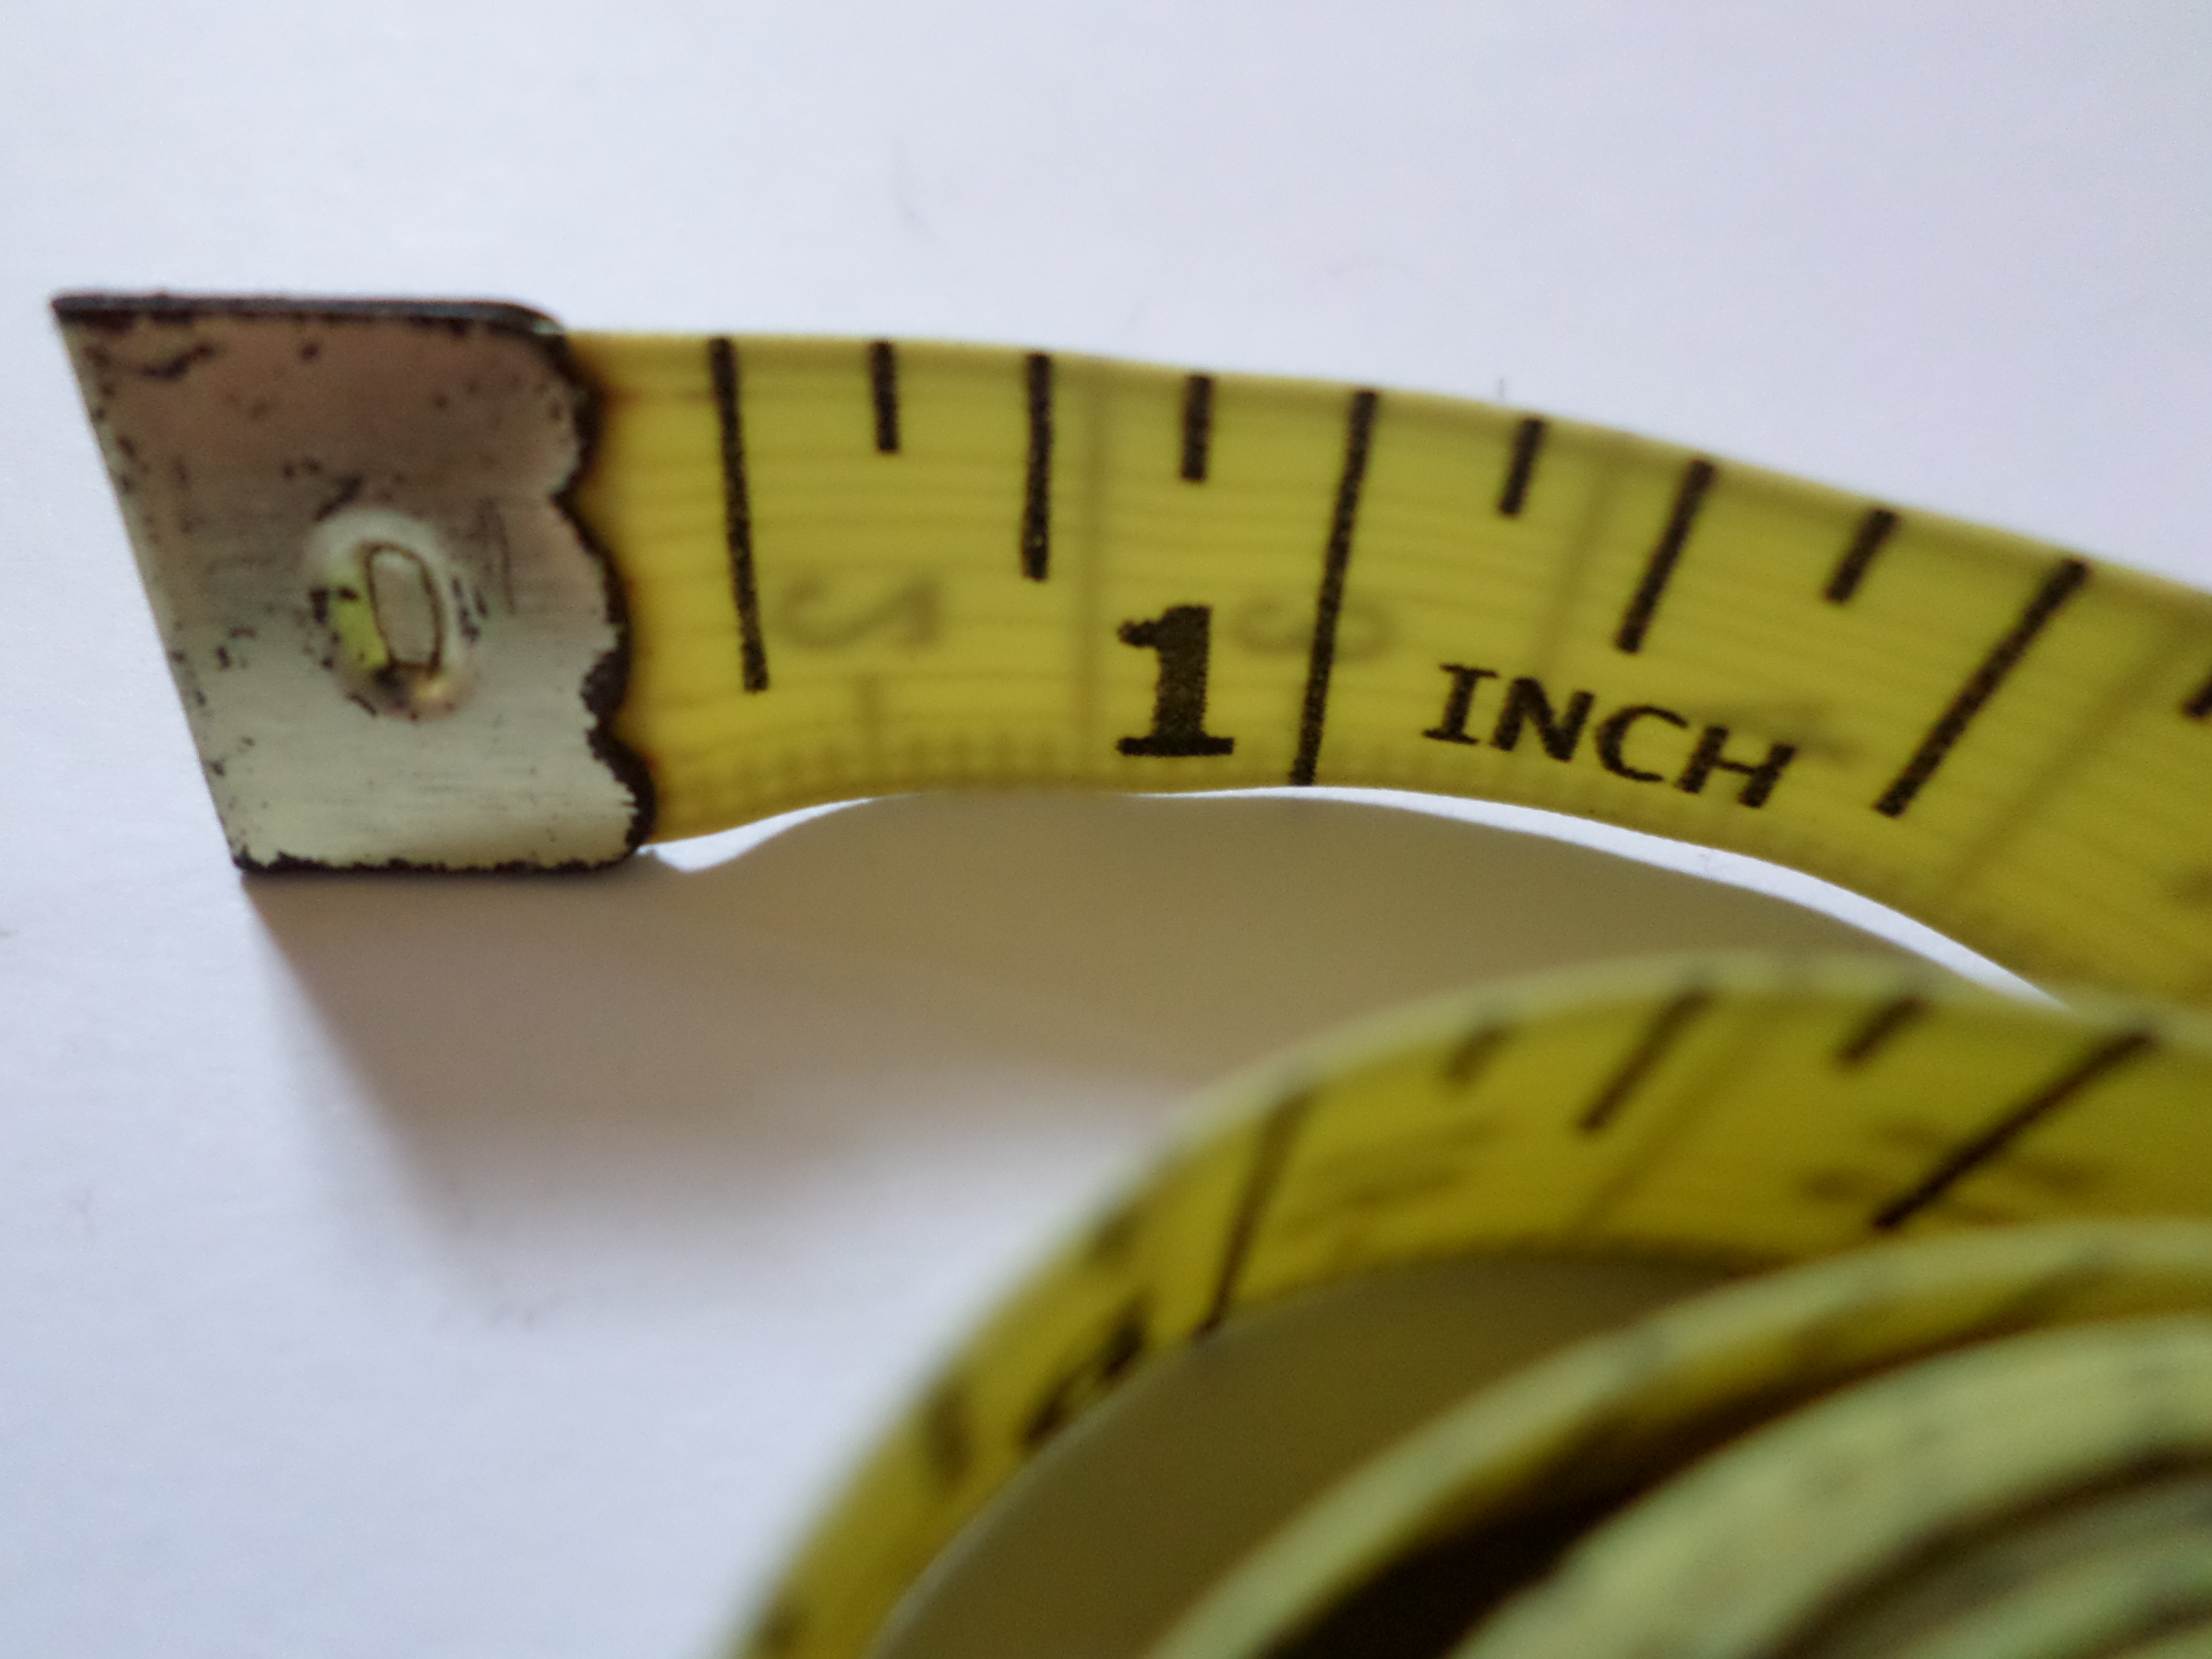 Measuring tape close up photo